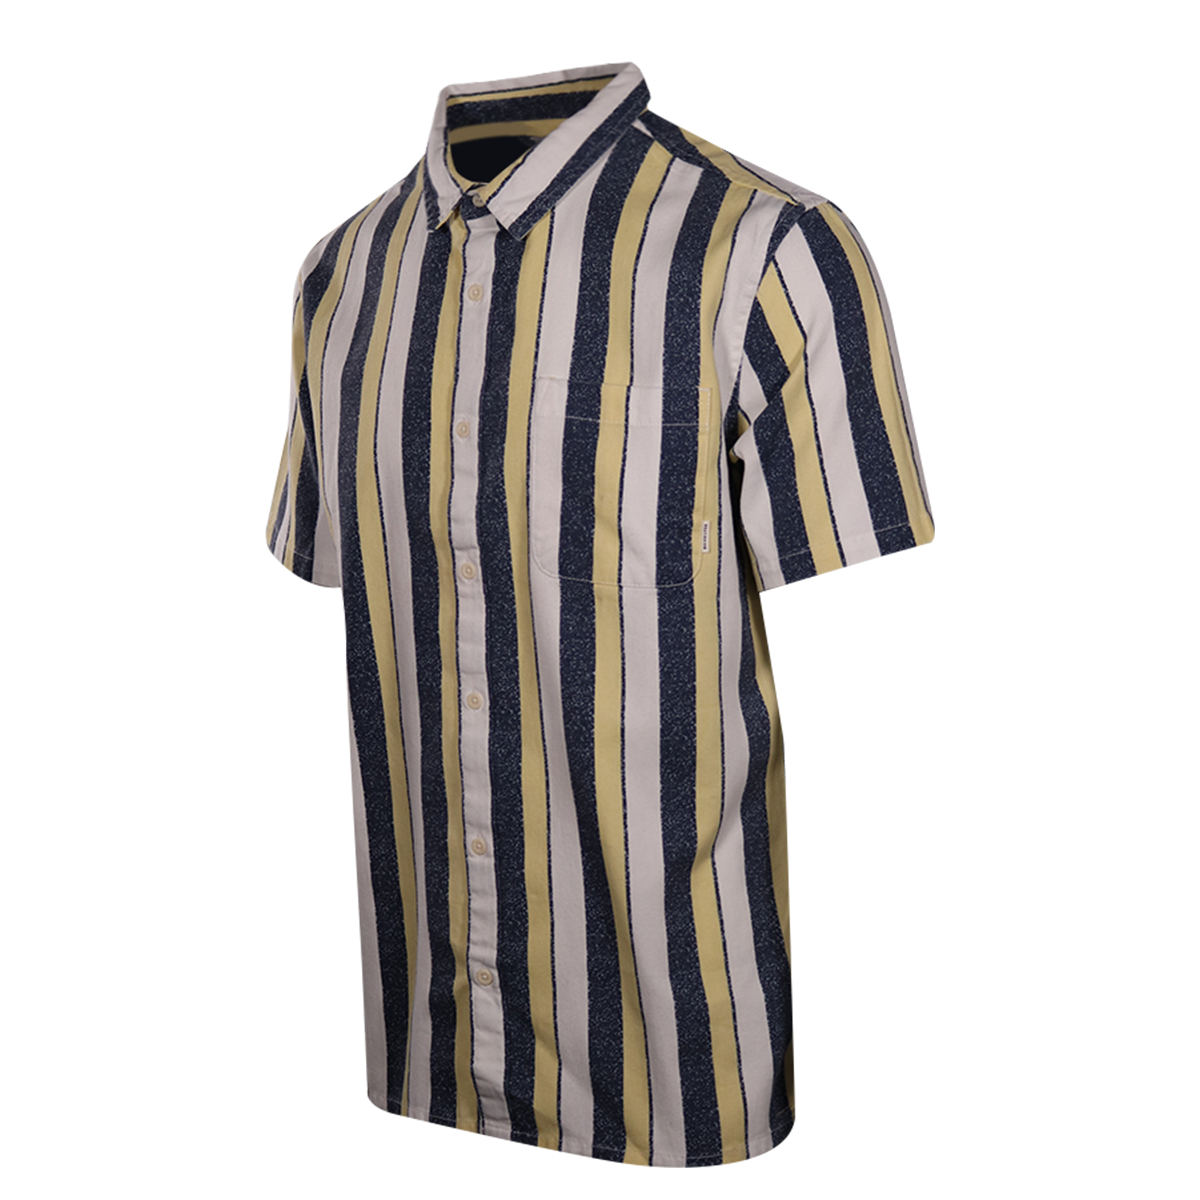 Quiksilver Men's Navy Yellow White Vertical Striped S/S Woven Shirt (S01)